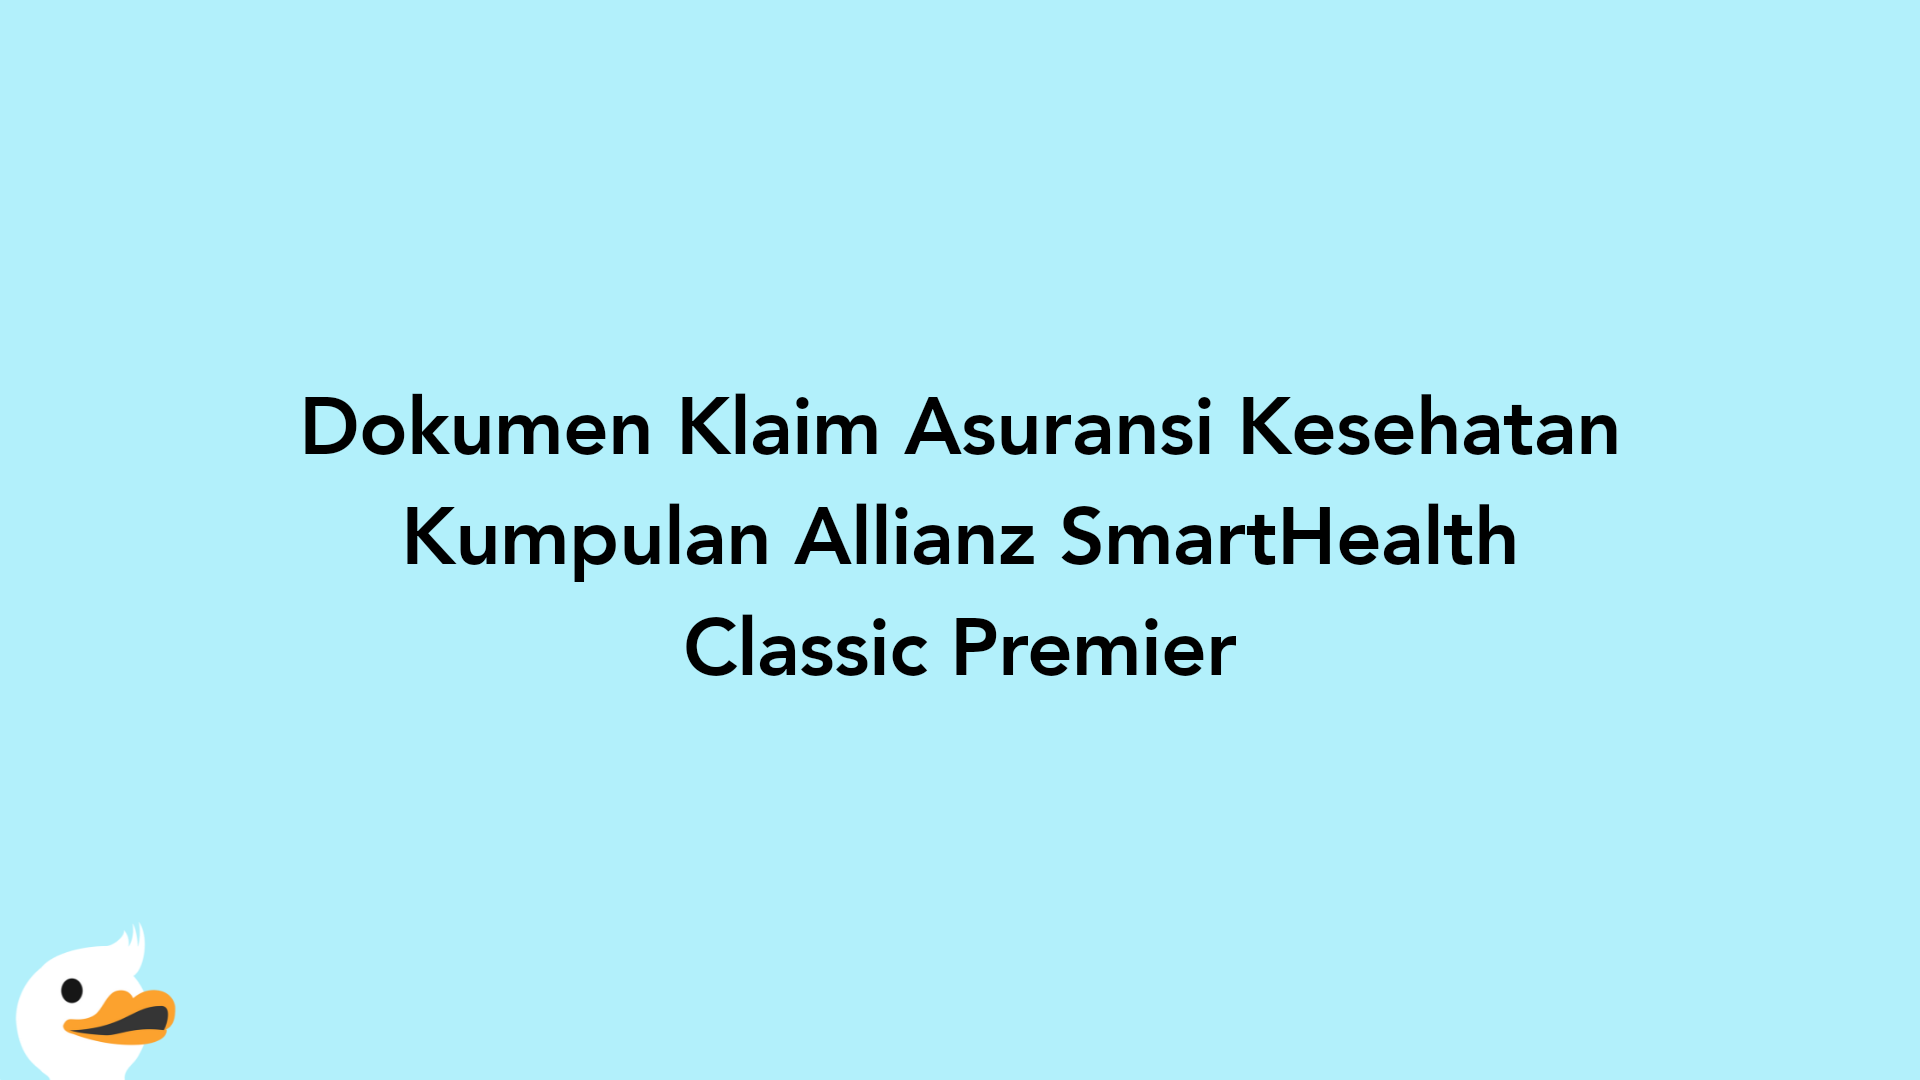 Dokumen Klaim Asuransi Kesehatan Kumpulan Allianz SmartHealth Classic Premier